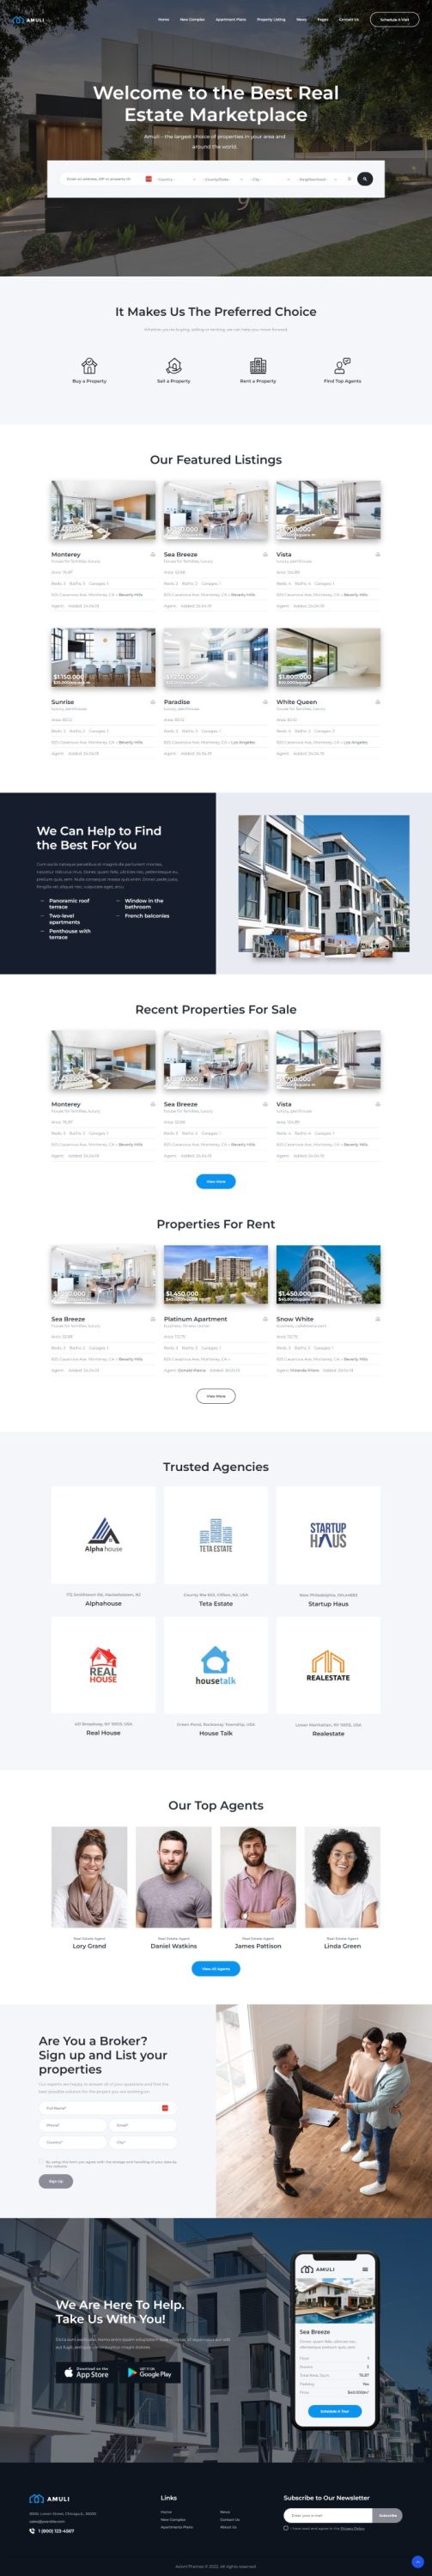 Mẫu website bất động sản - amuli real estate marketplace